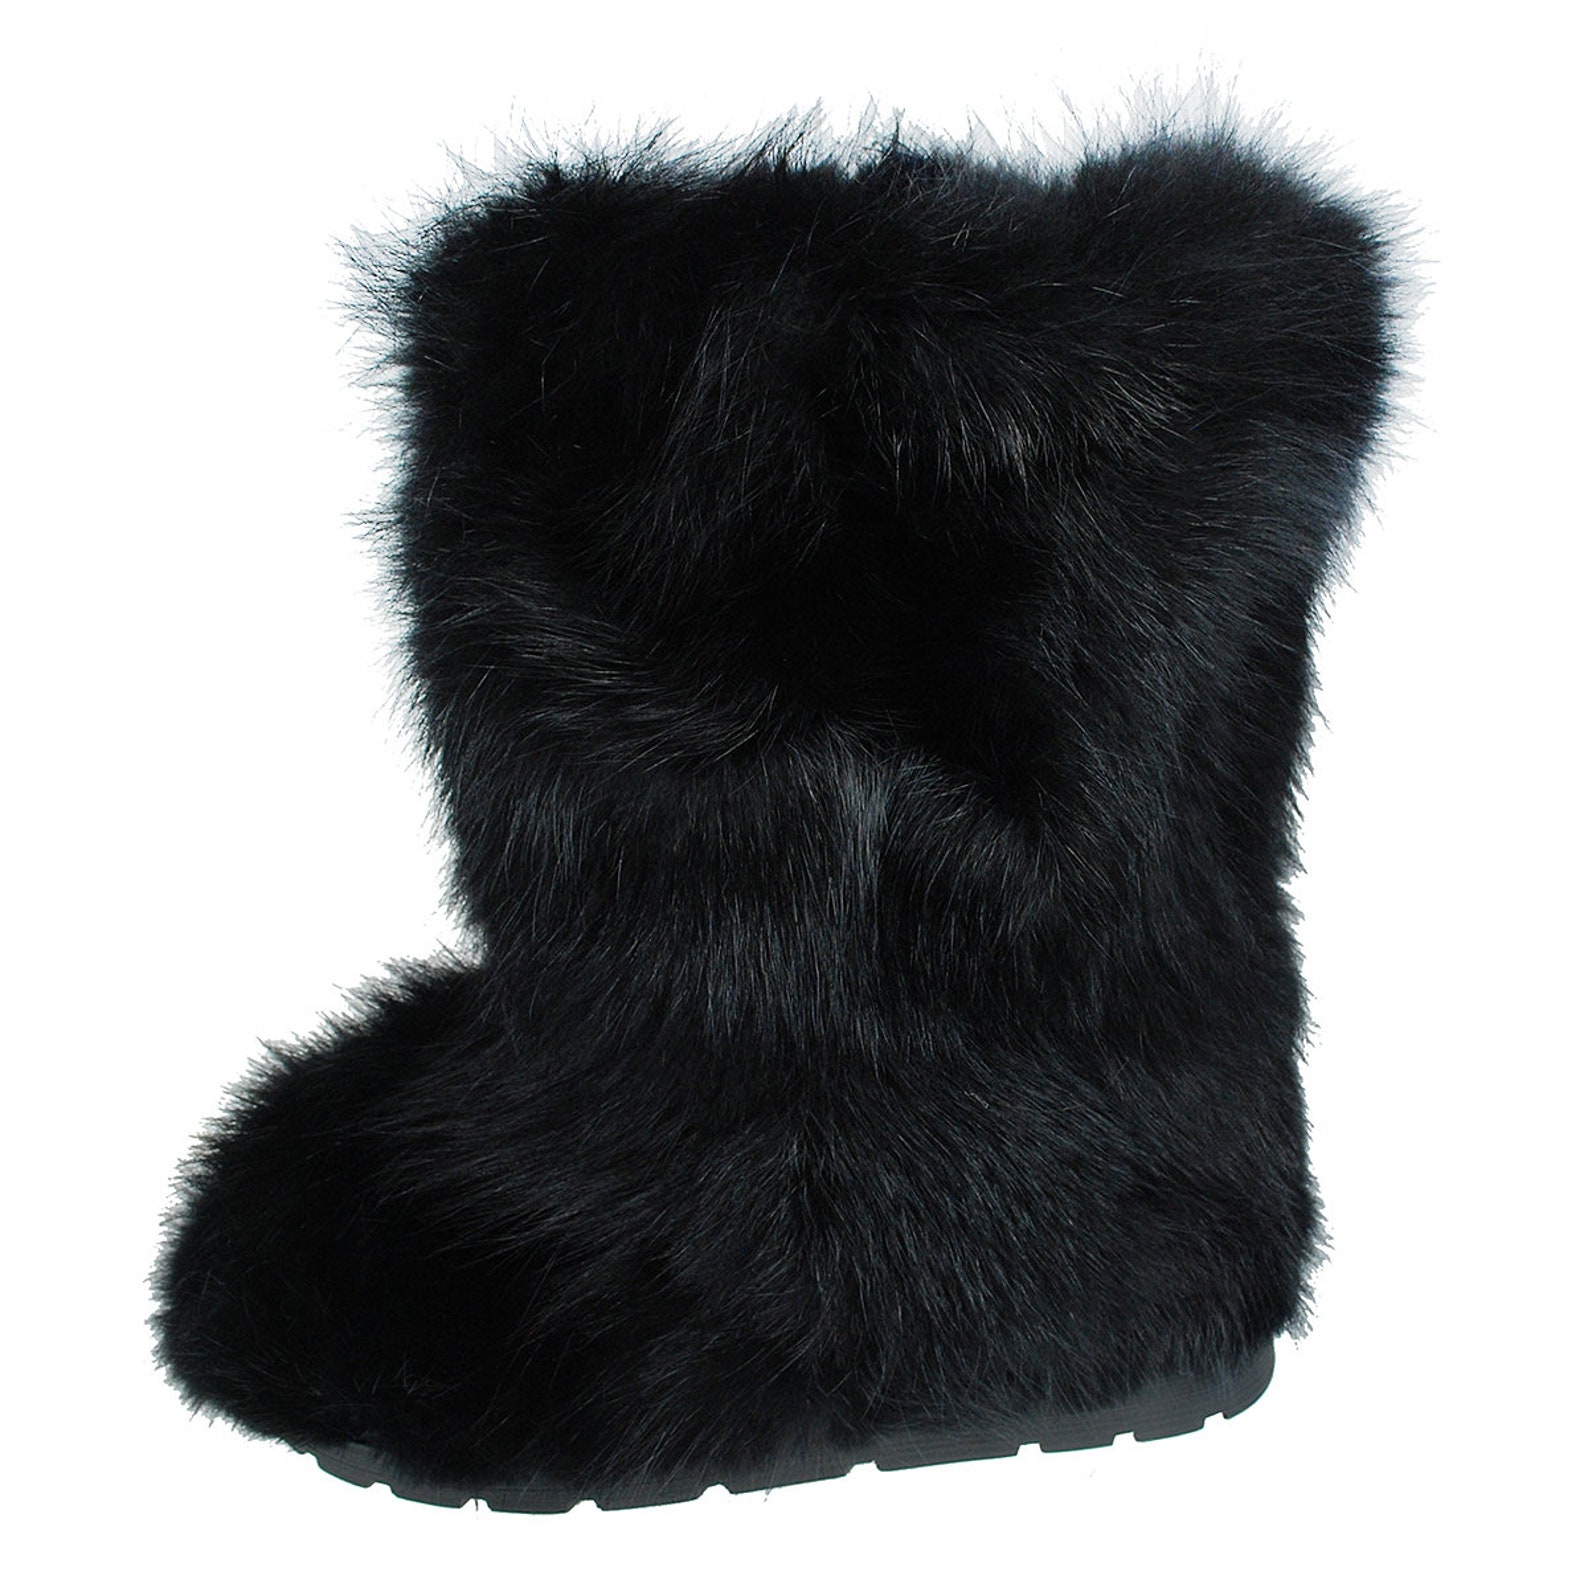 Black fox fur boots for women mukluks yeti boots Eskimo | Etsy